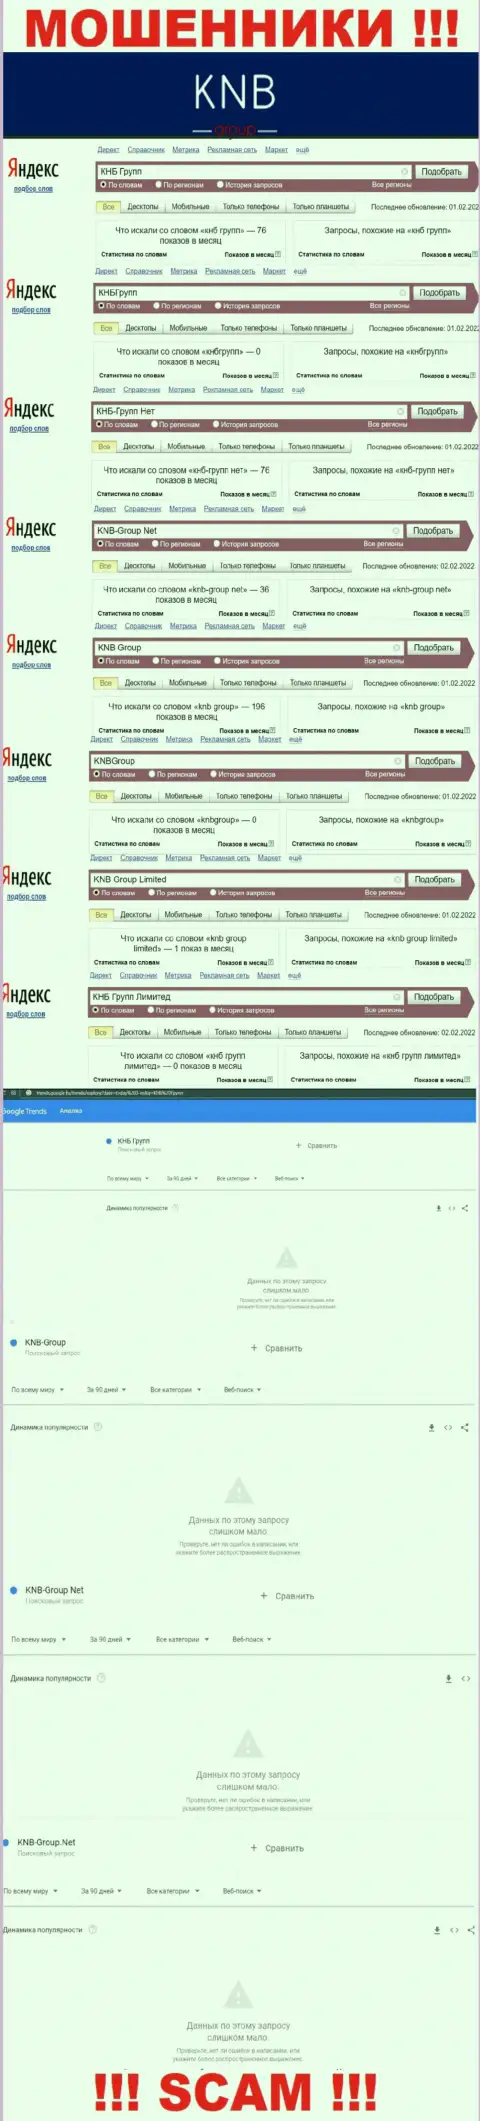 Скрин результата онлайн запросов по противозаконно действующей компании KNB Group